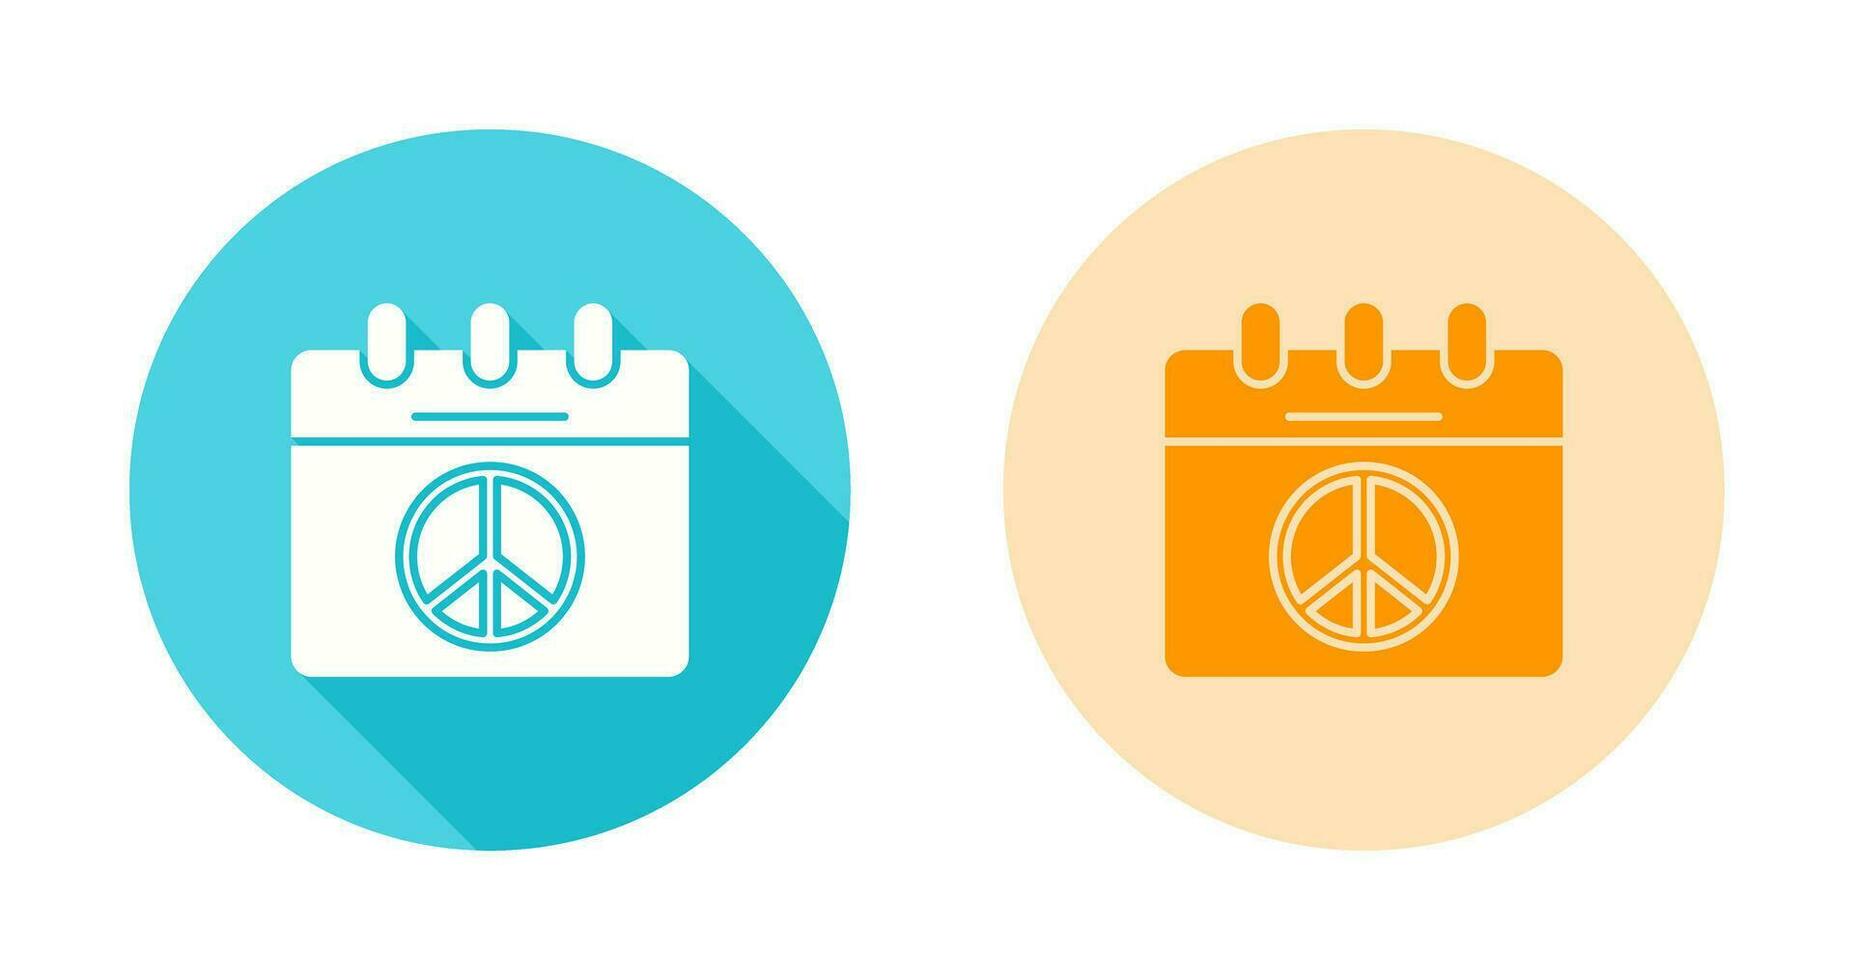 icône de vecteur de calendrier de paix